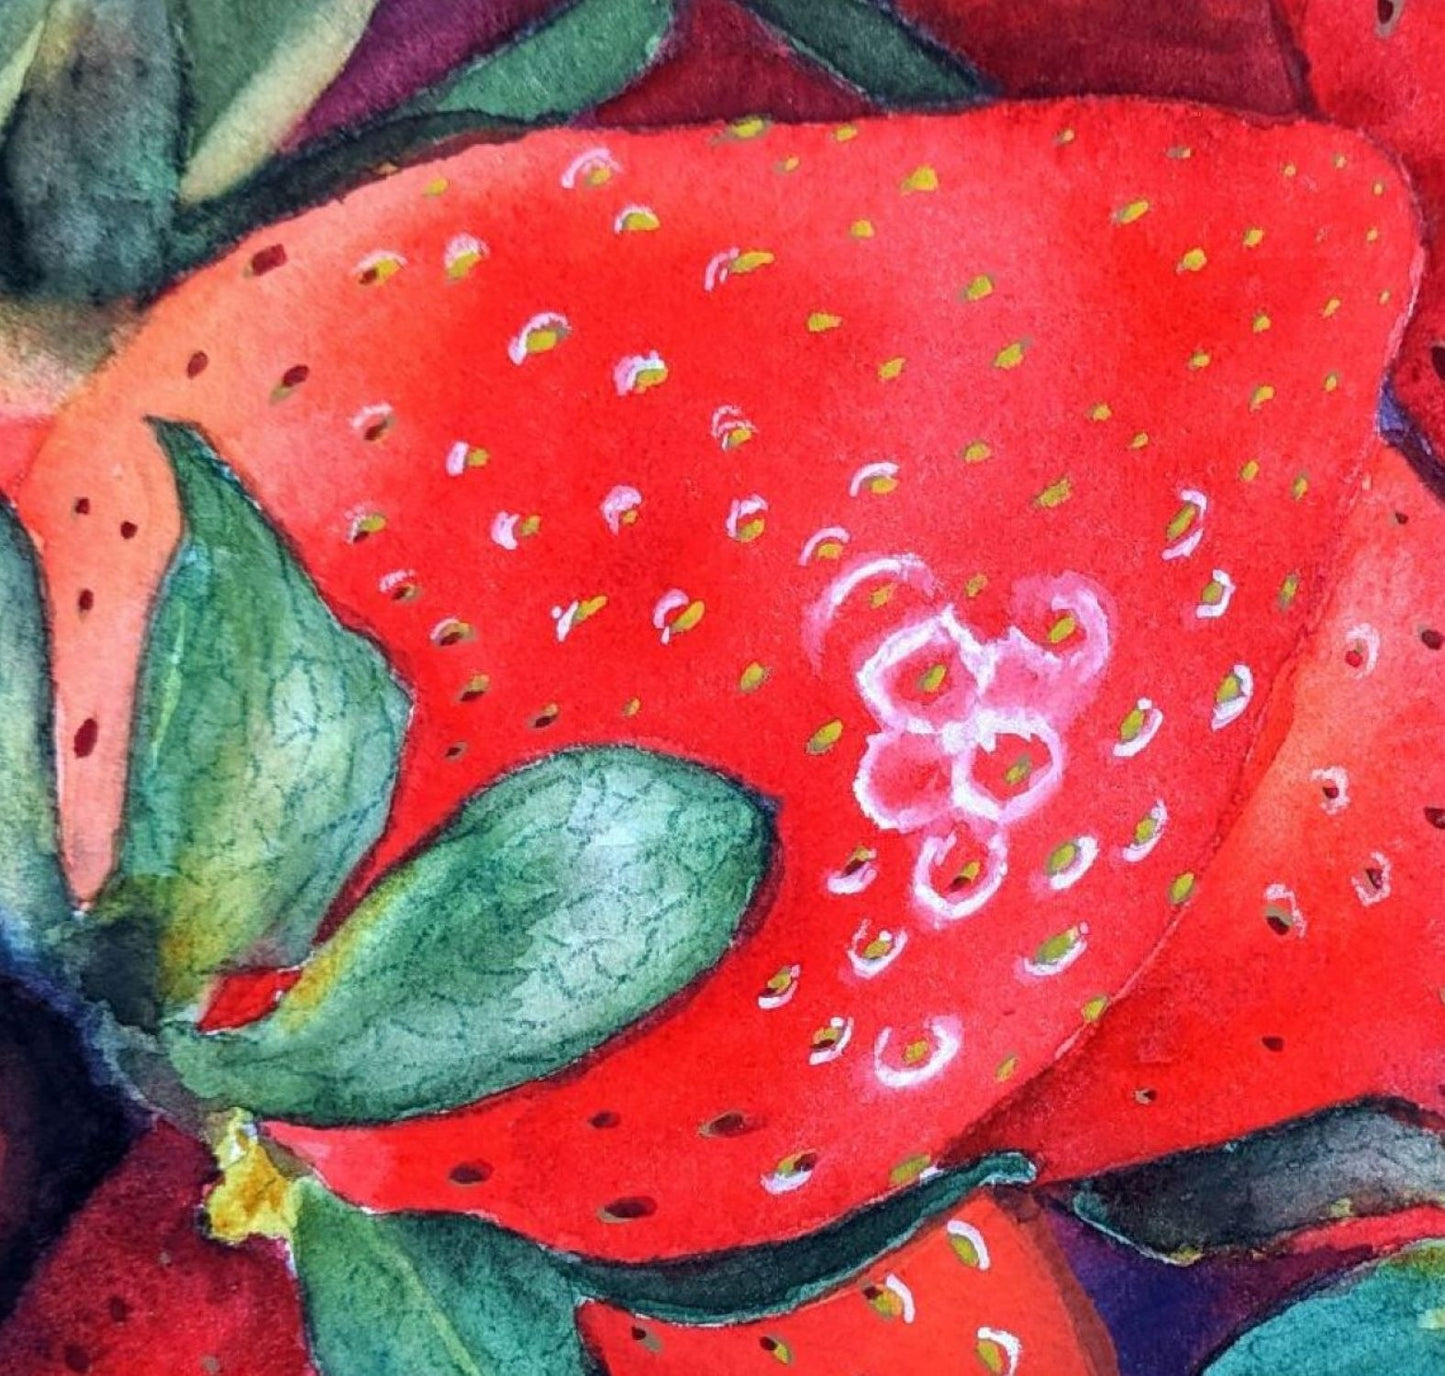 Strawberries watercolor painting detail